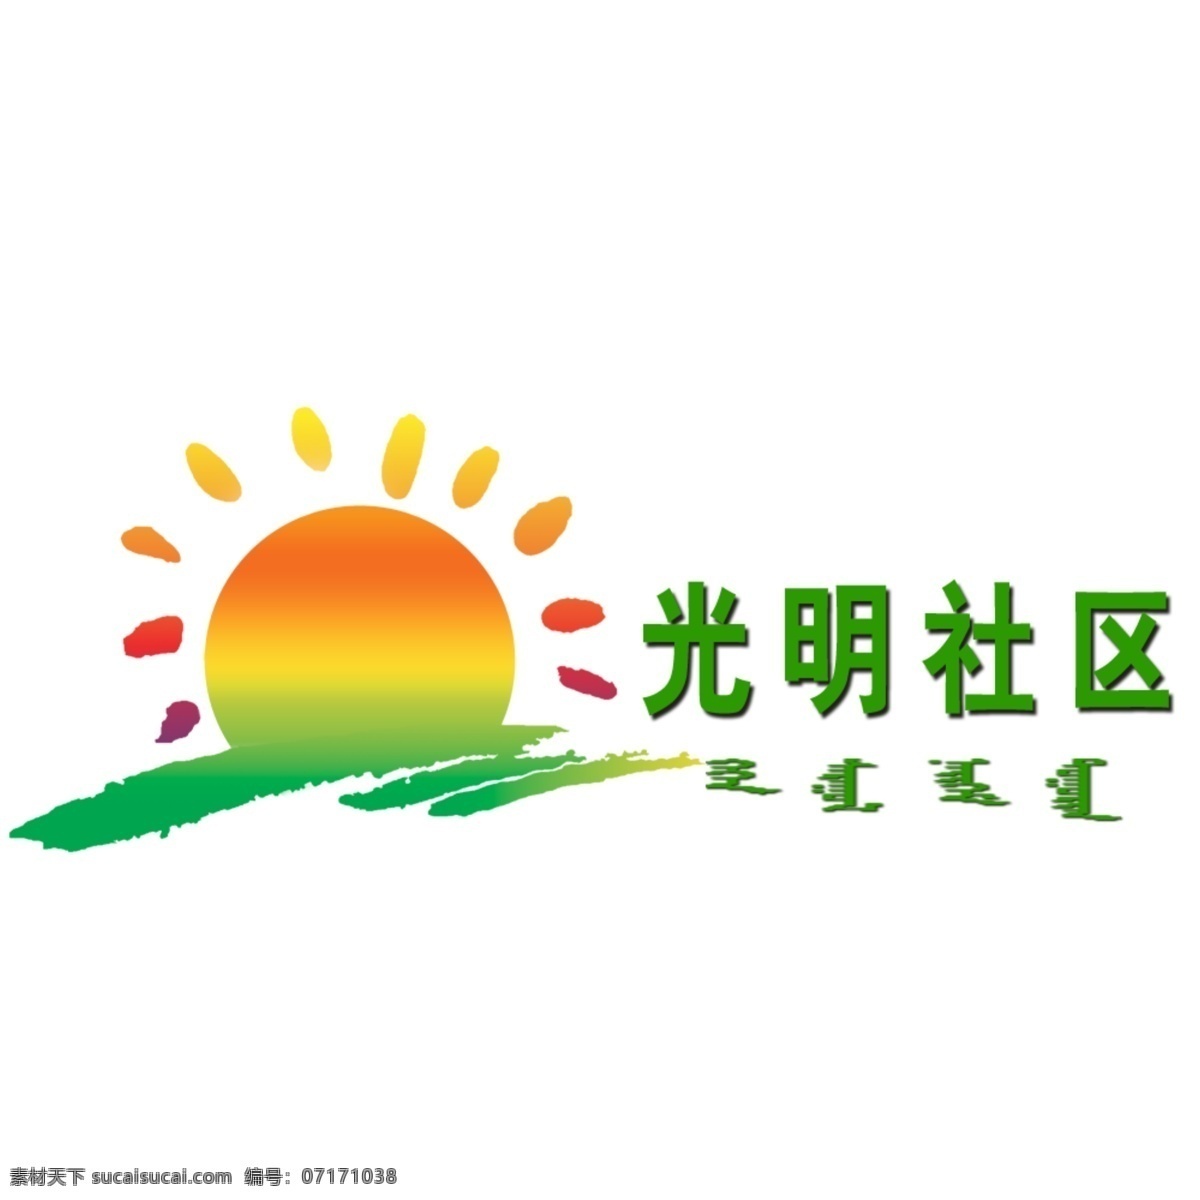 光明 社区 logo 社区logo 白色